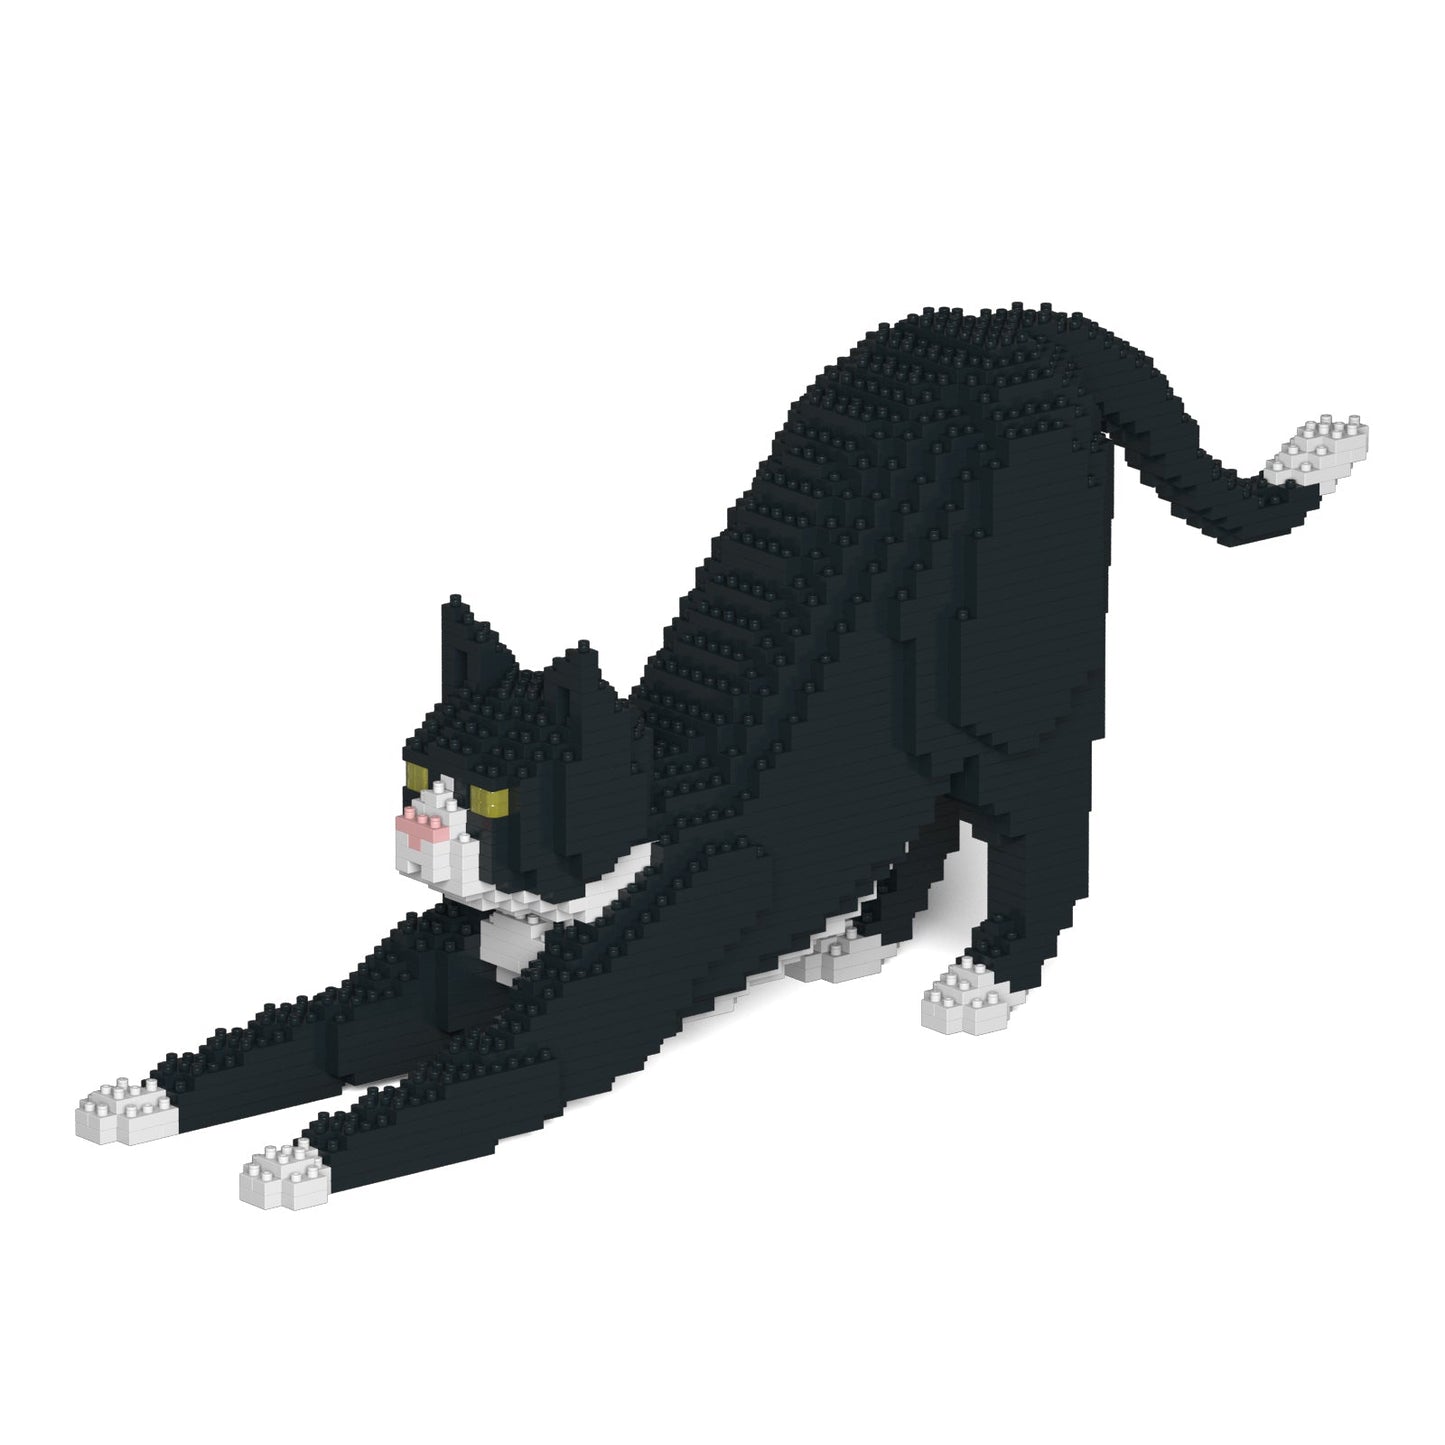 Tuxedo Cat 04S